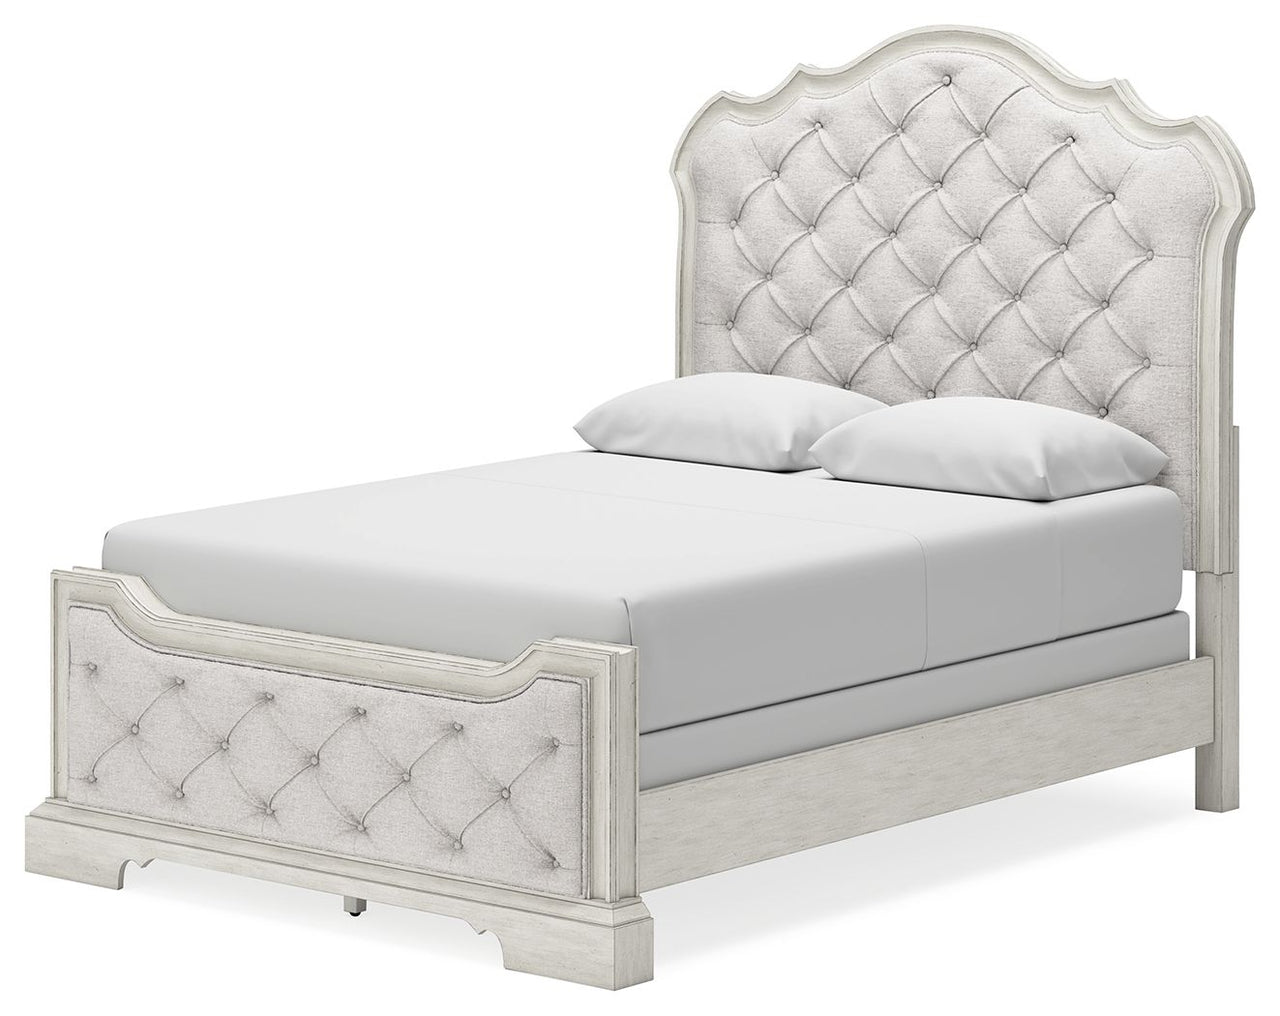 Arlendyne - Upholstered Bed - Tony's Home Furnishings